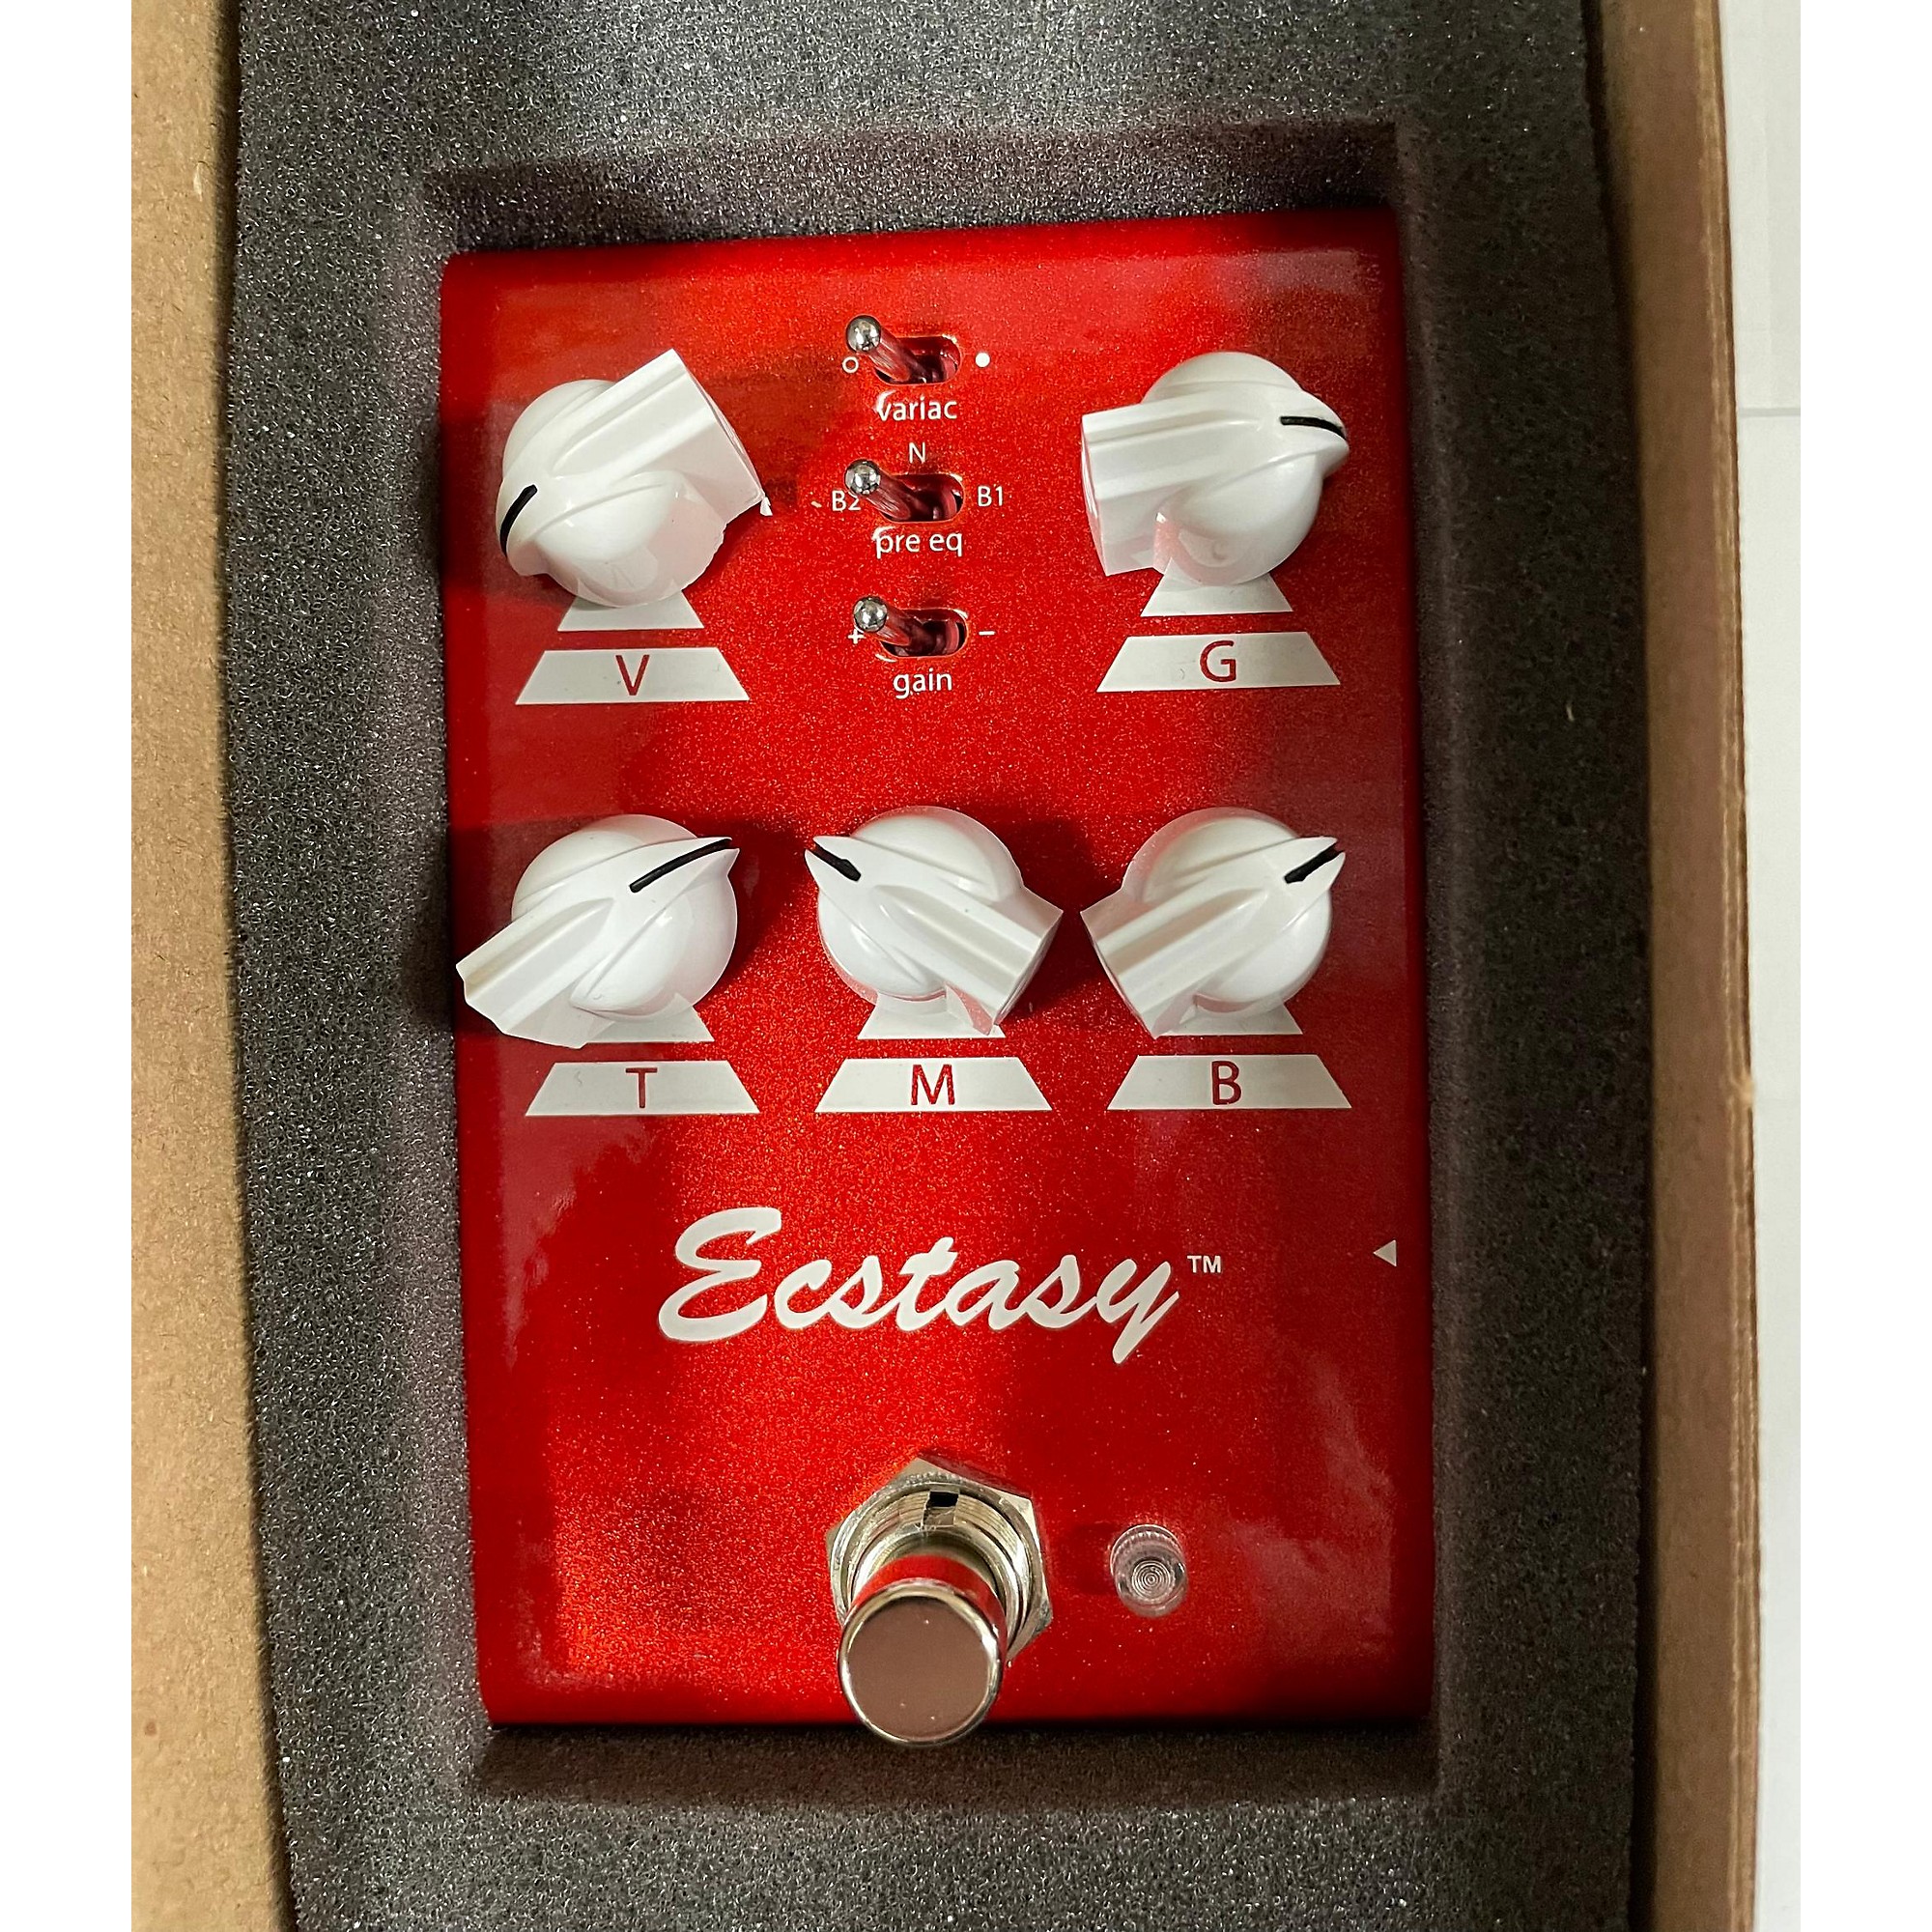 Used Bogner Ecstasy Red Overdrive Effect Pedal | Guitar Center